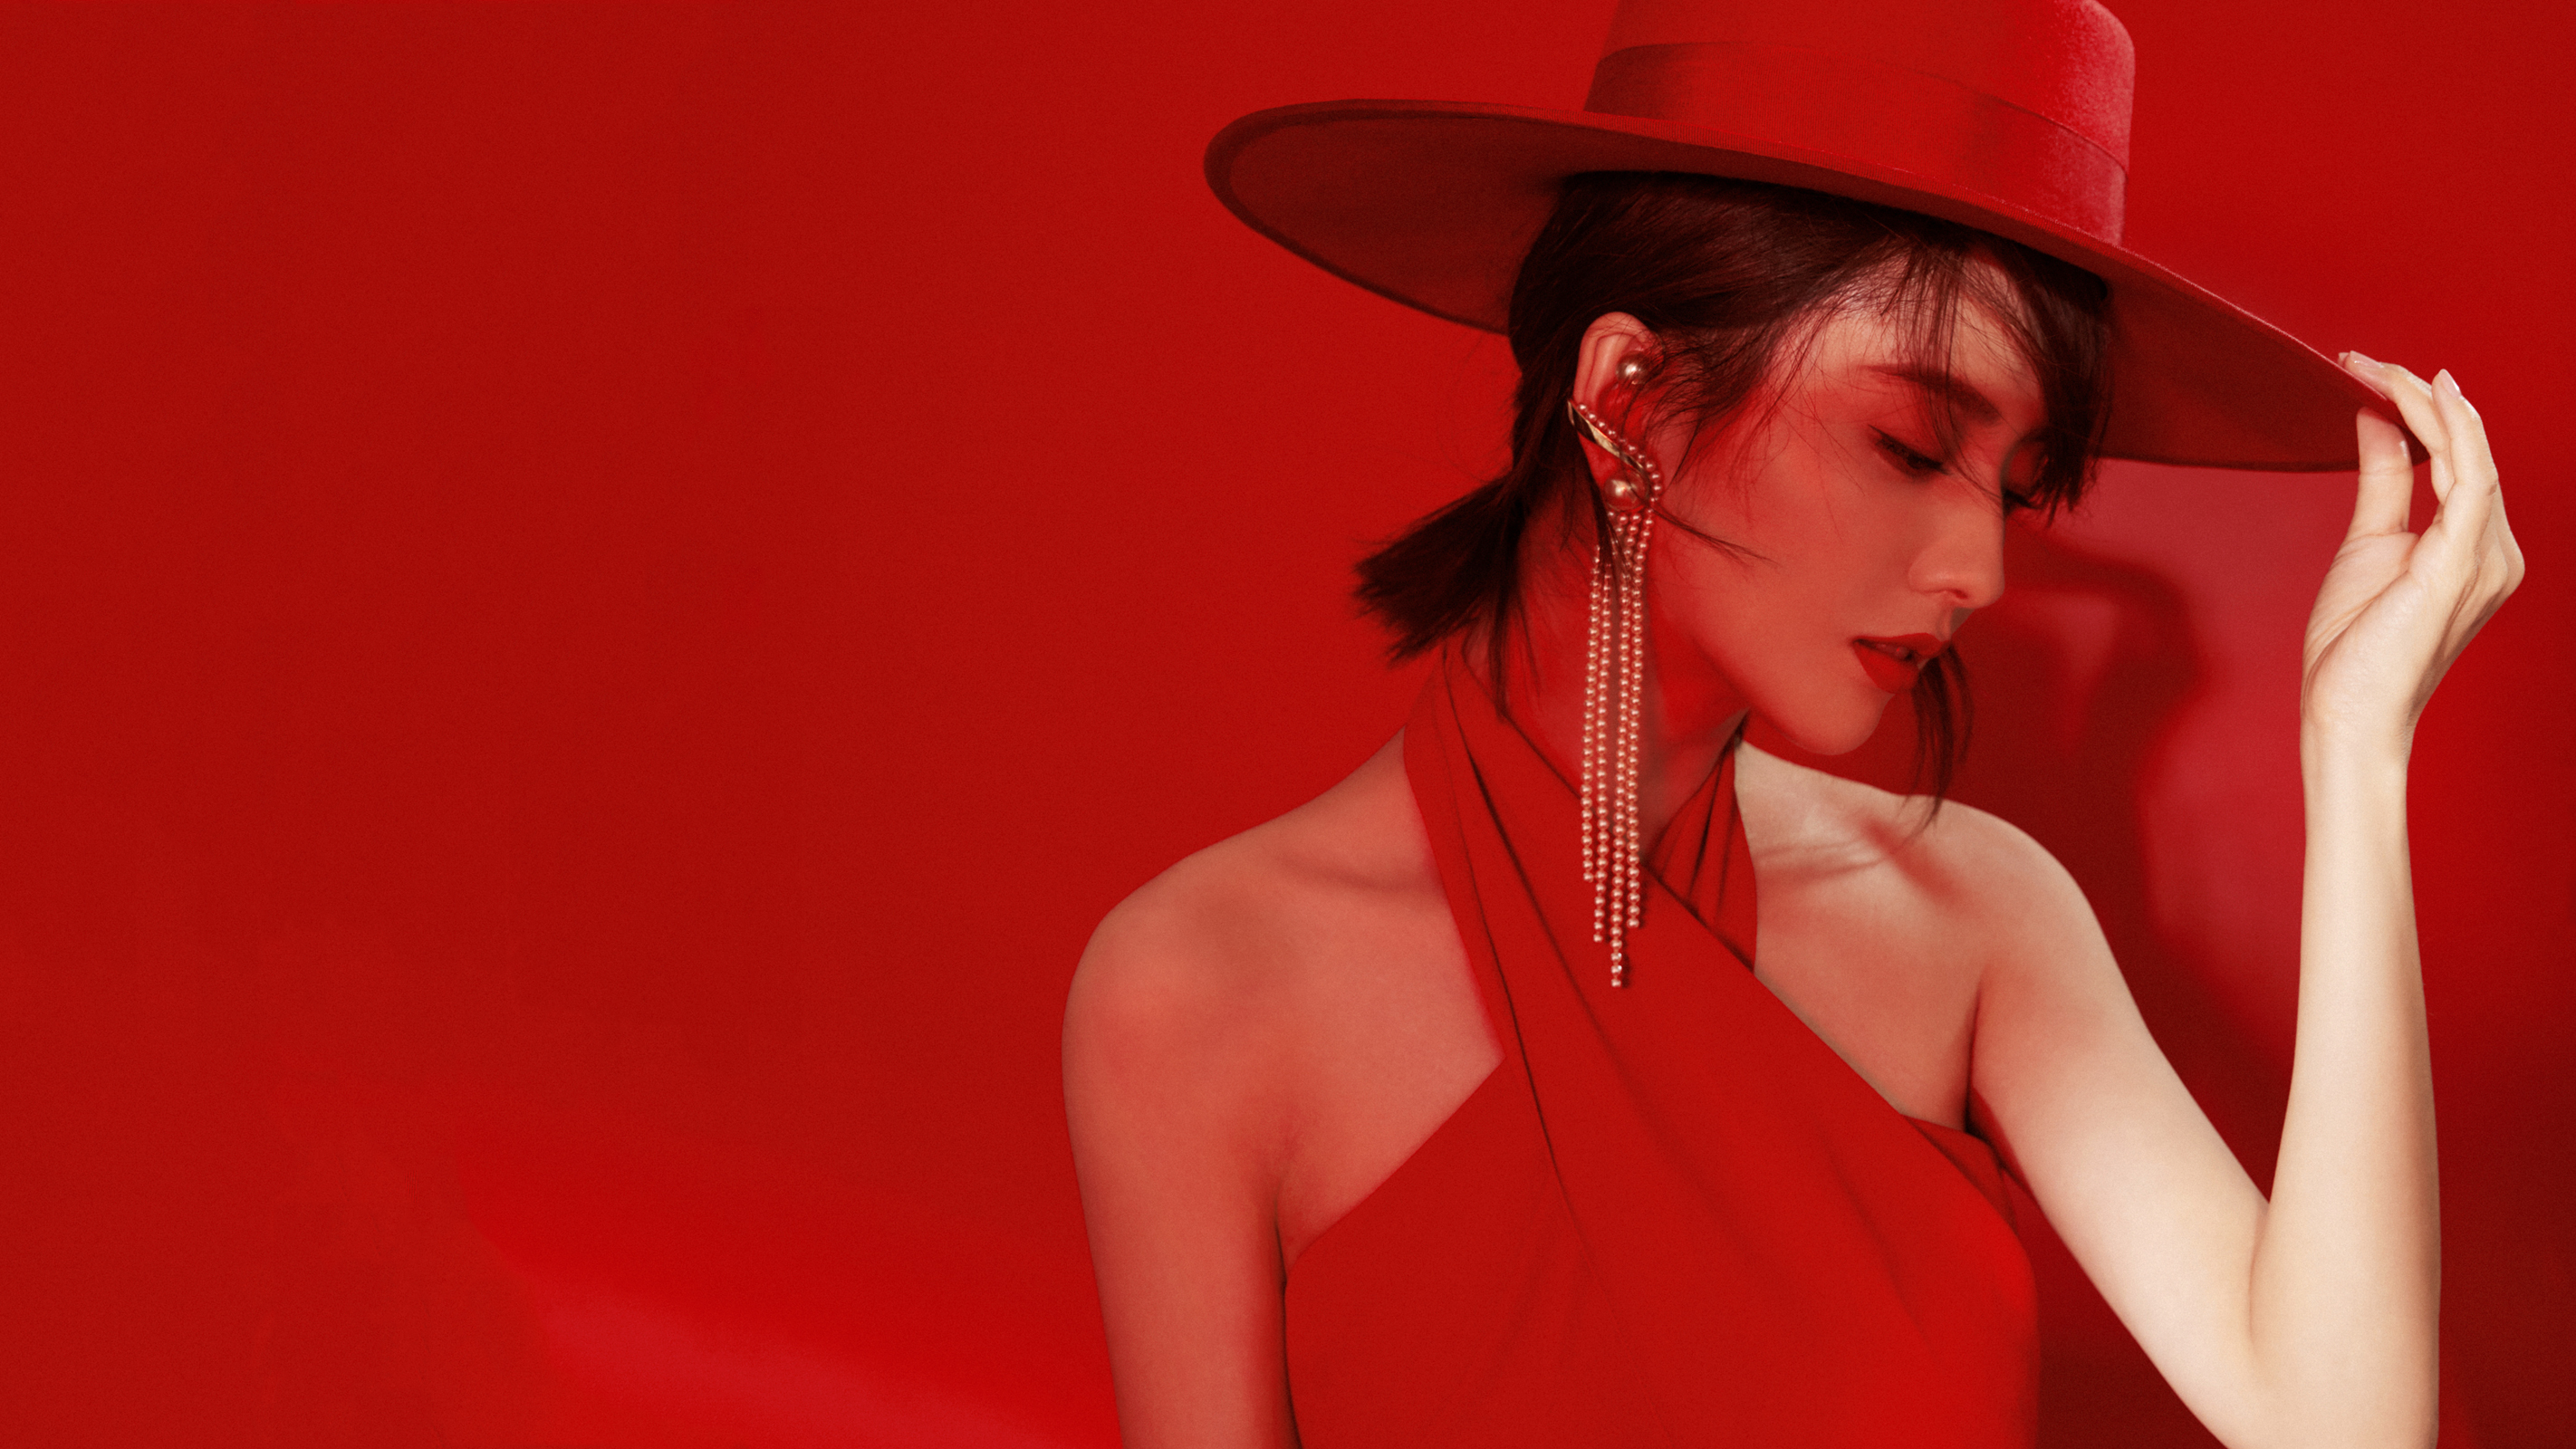 Women China Tong Liya Hat Brunette Model Red Dress Red Hats Bare Shoulders Red Background Studio 2844x1600